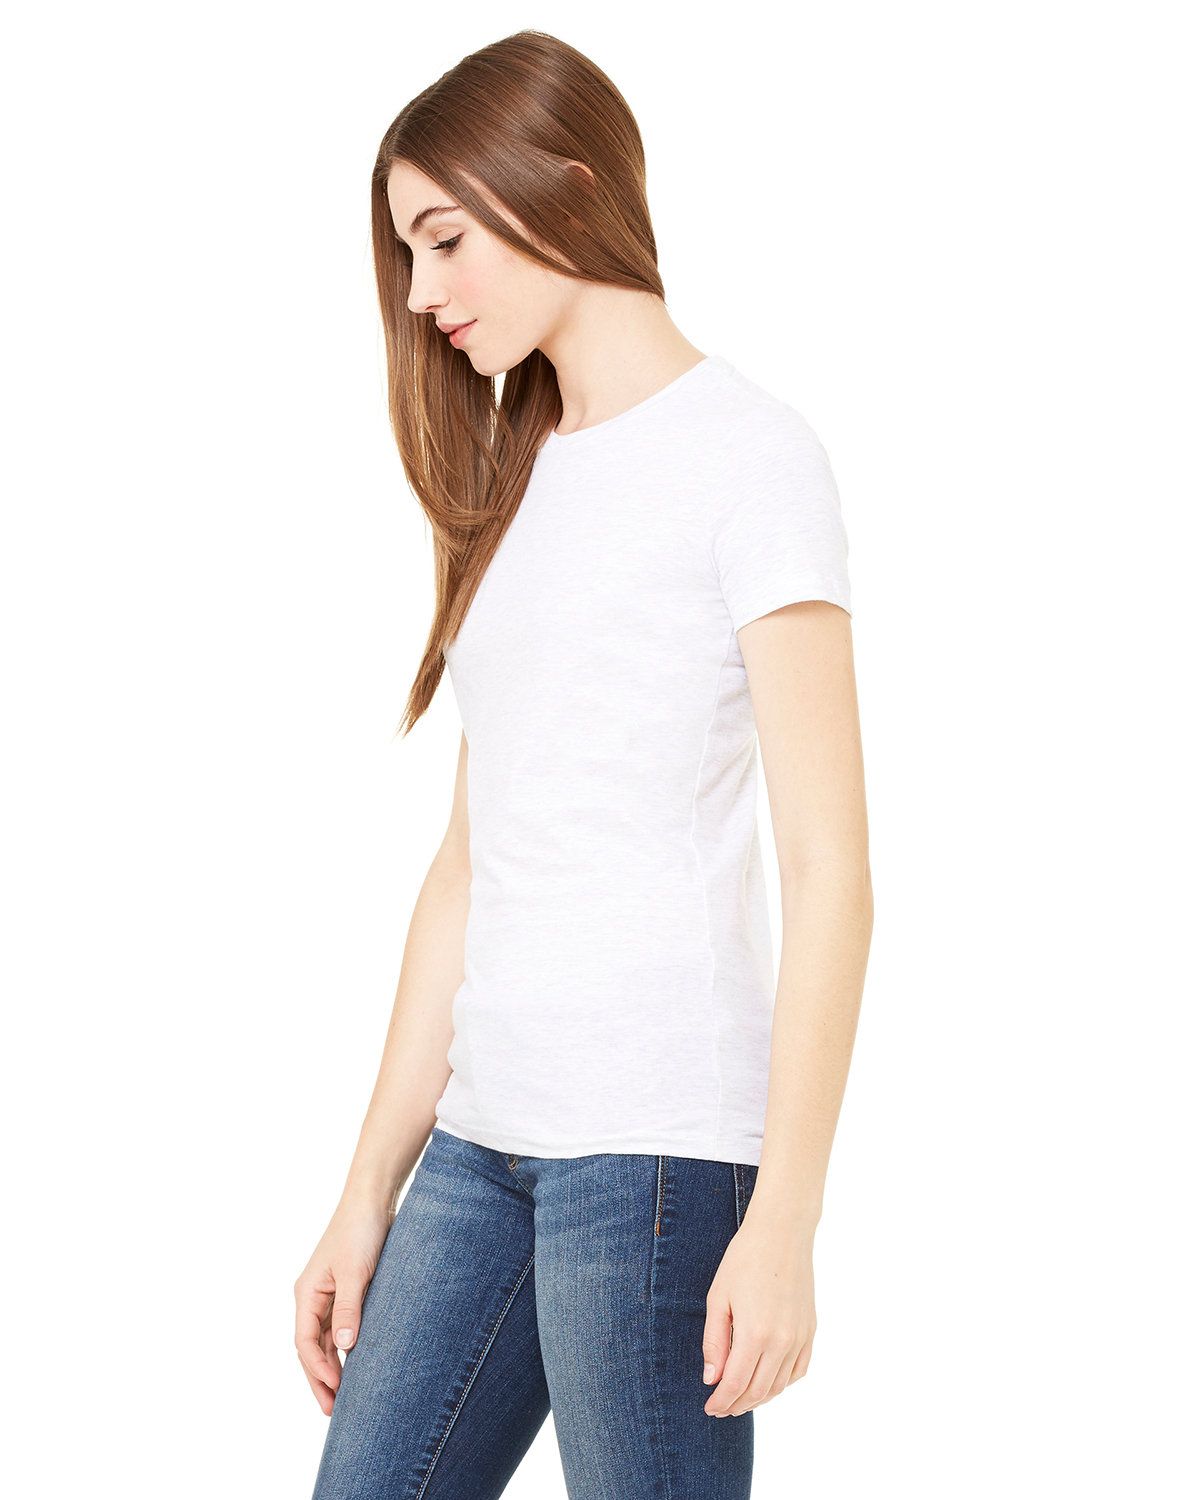 Bella + Canvas 6004, Women's Slim Fit T-Shirt